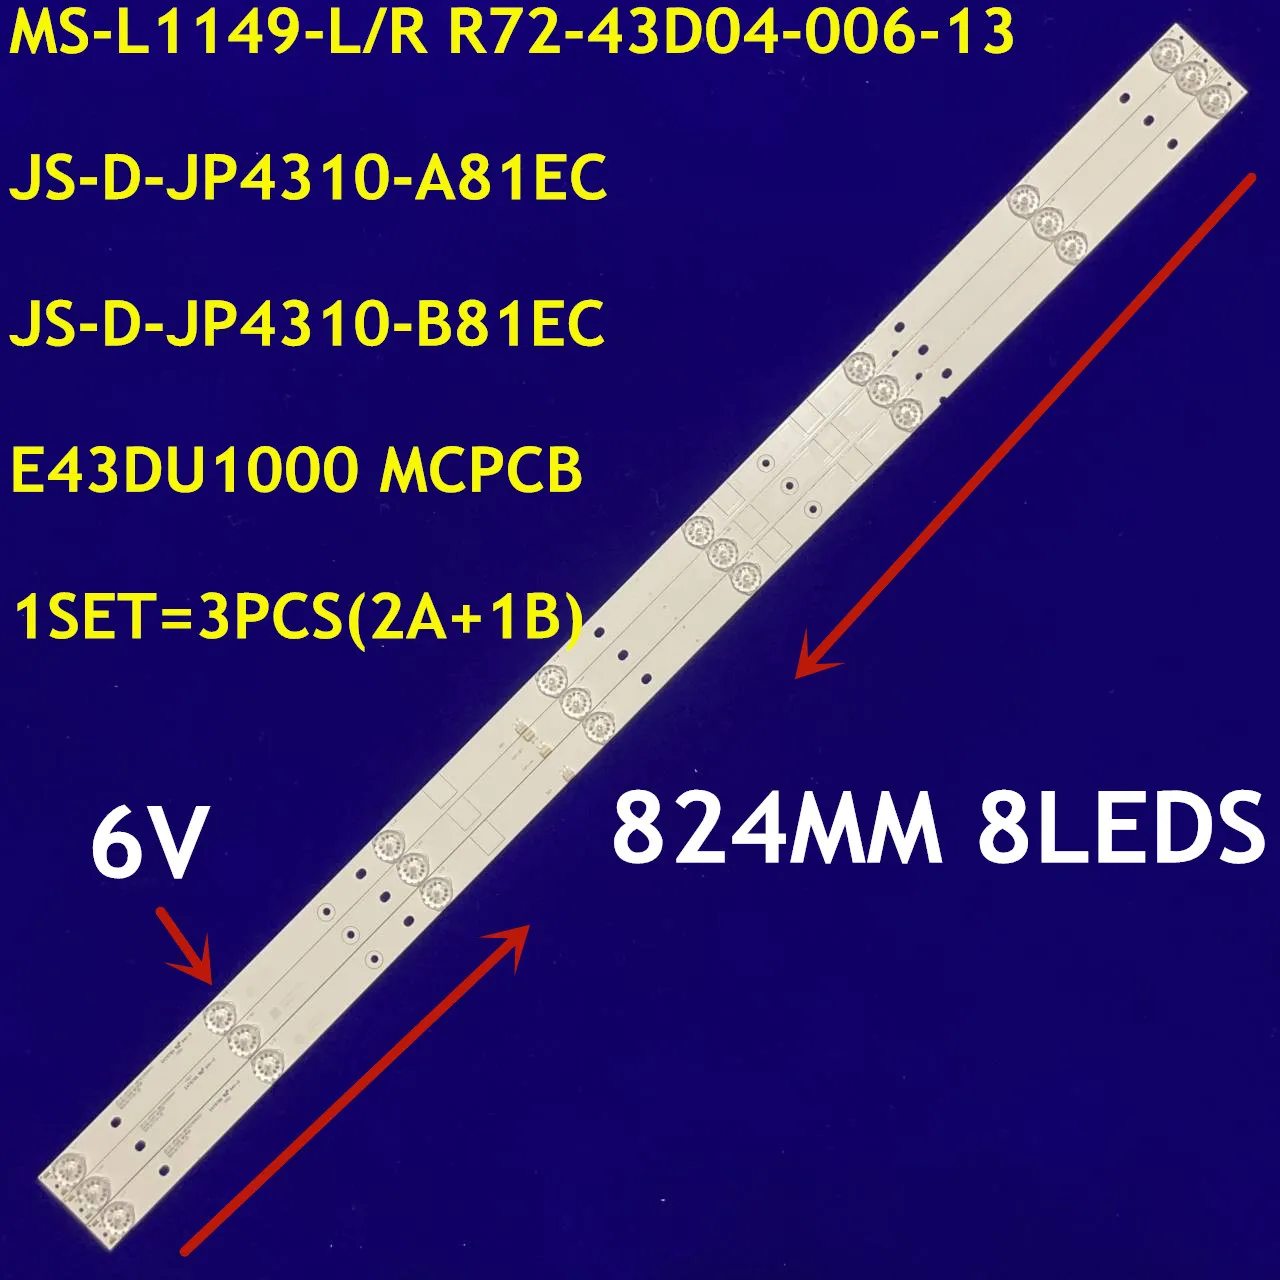 824MM LED Backlight 8Lamp For a kai 43 inch TV JS-D-JP4310-A81EC JS-D-JP4310-B81EC E43DU1000 MCPCB MS-L1149-L/R R72-43D04-006-1